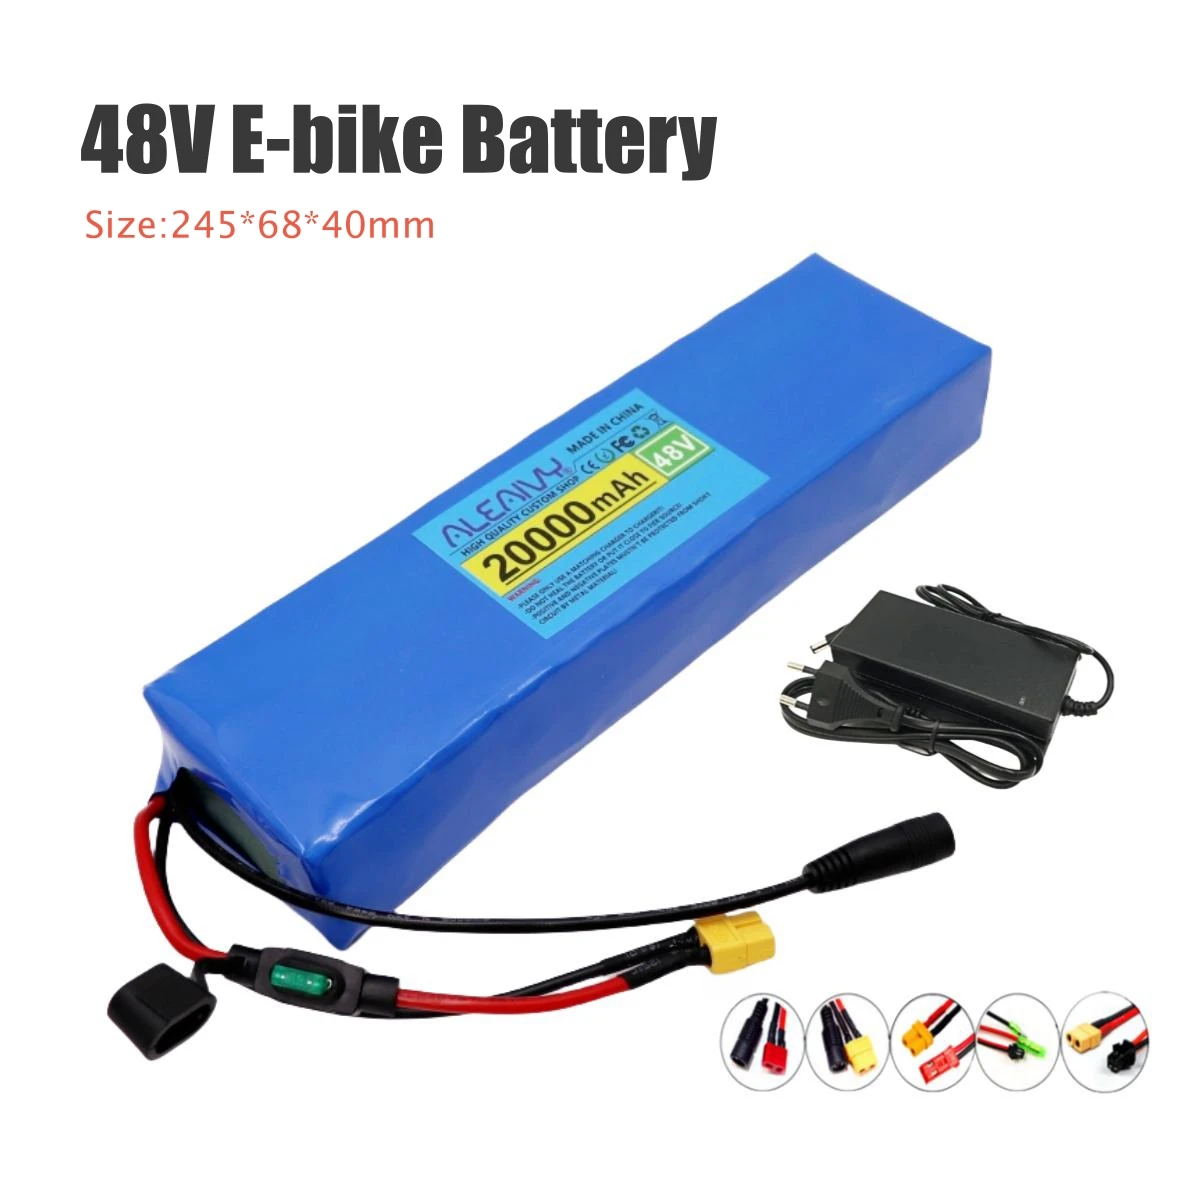 

E-bike Battery Pack 48v 20Ah 18650 Lithium Ion Battery Pack 13S2P Bike Conversion Kit Bafang1000w+XT60 Plug， 54.6V 2A Charger